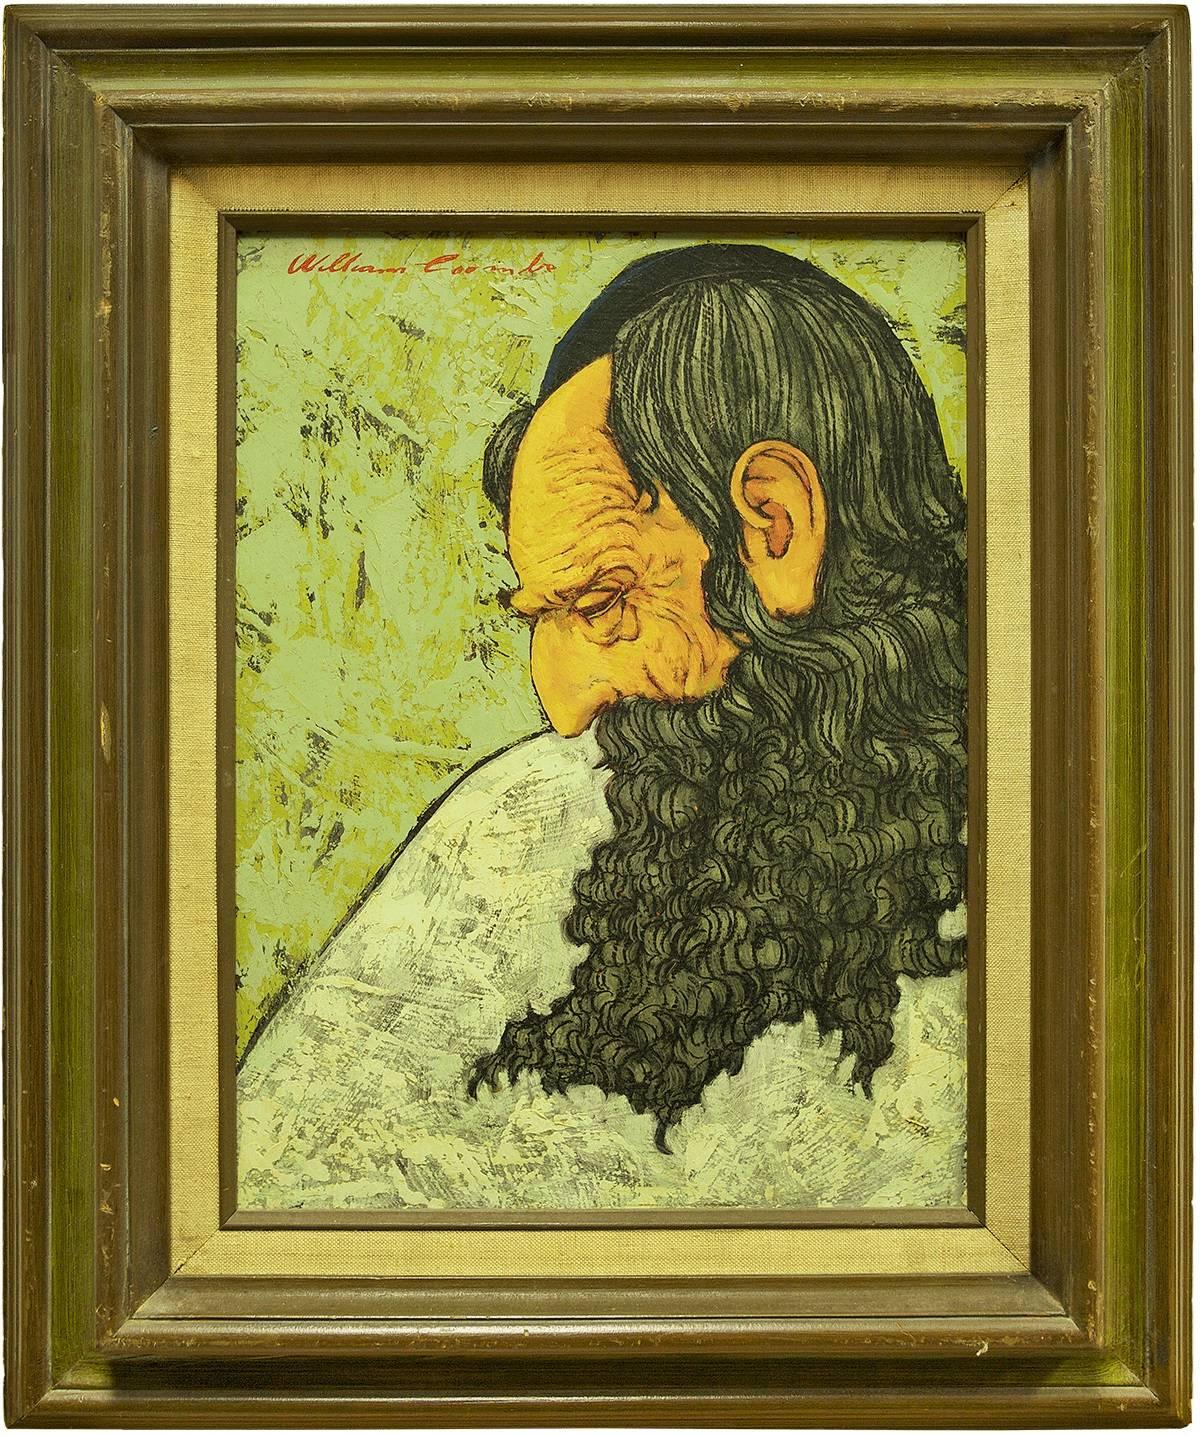 William Coombs Figurative Painting - Judaica Modernist "The Sage" Rabbi Portrait 